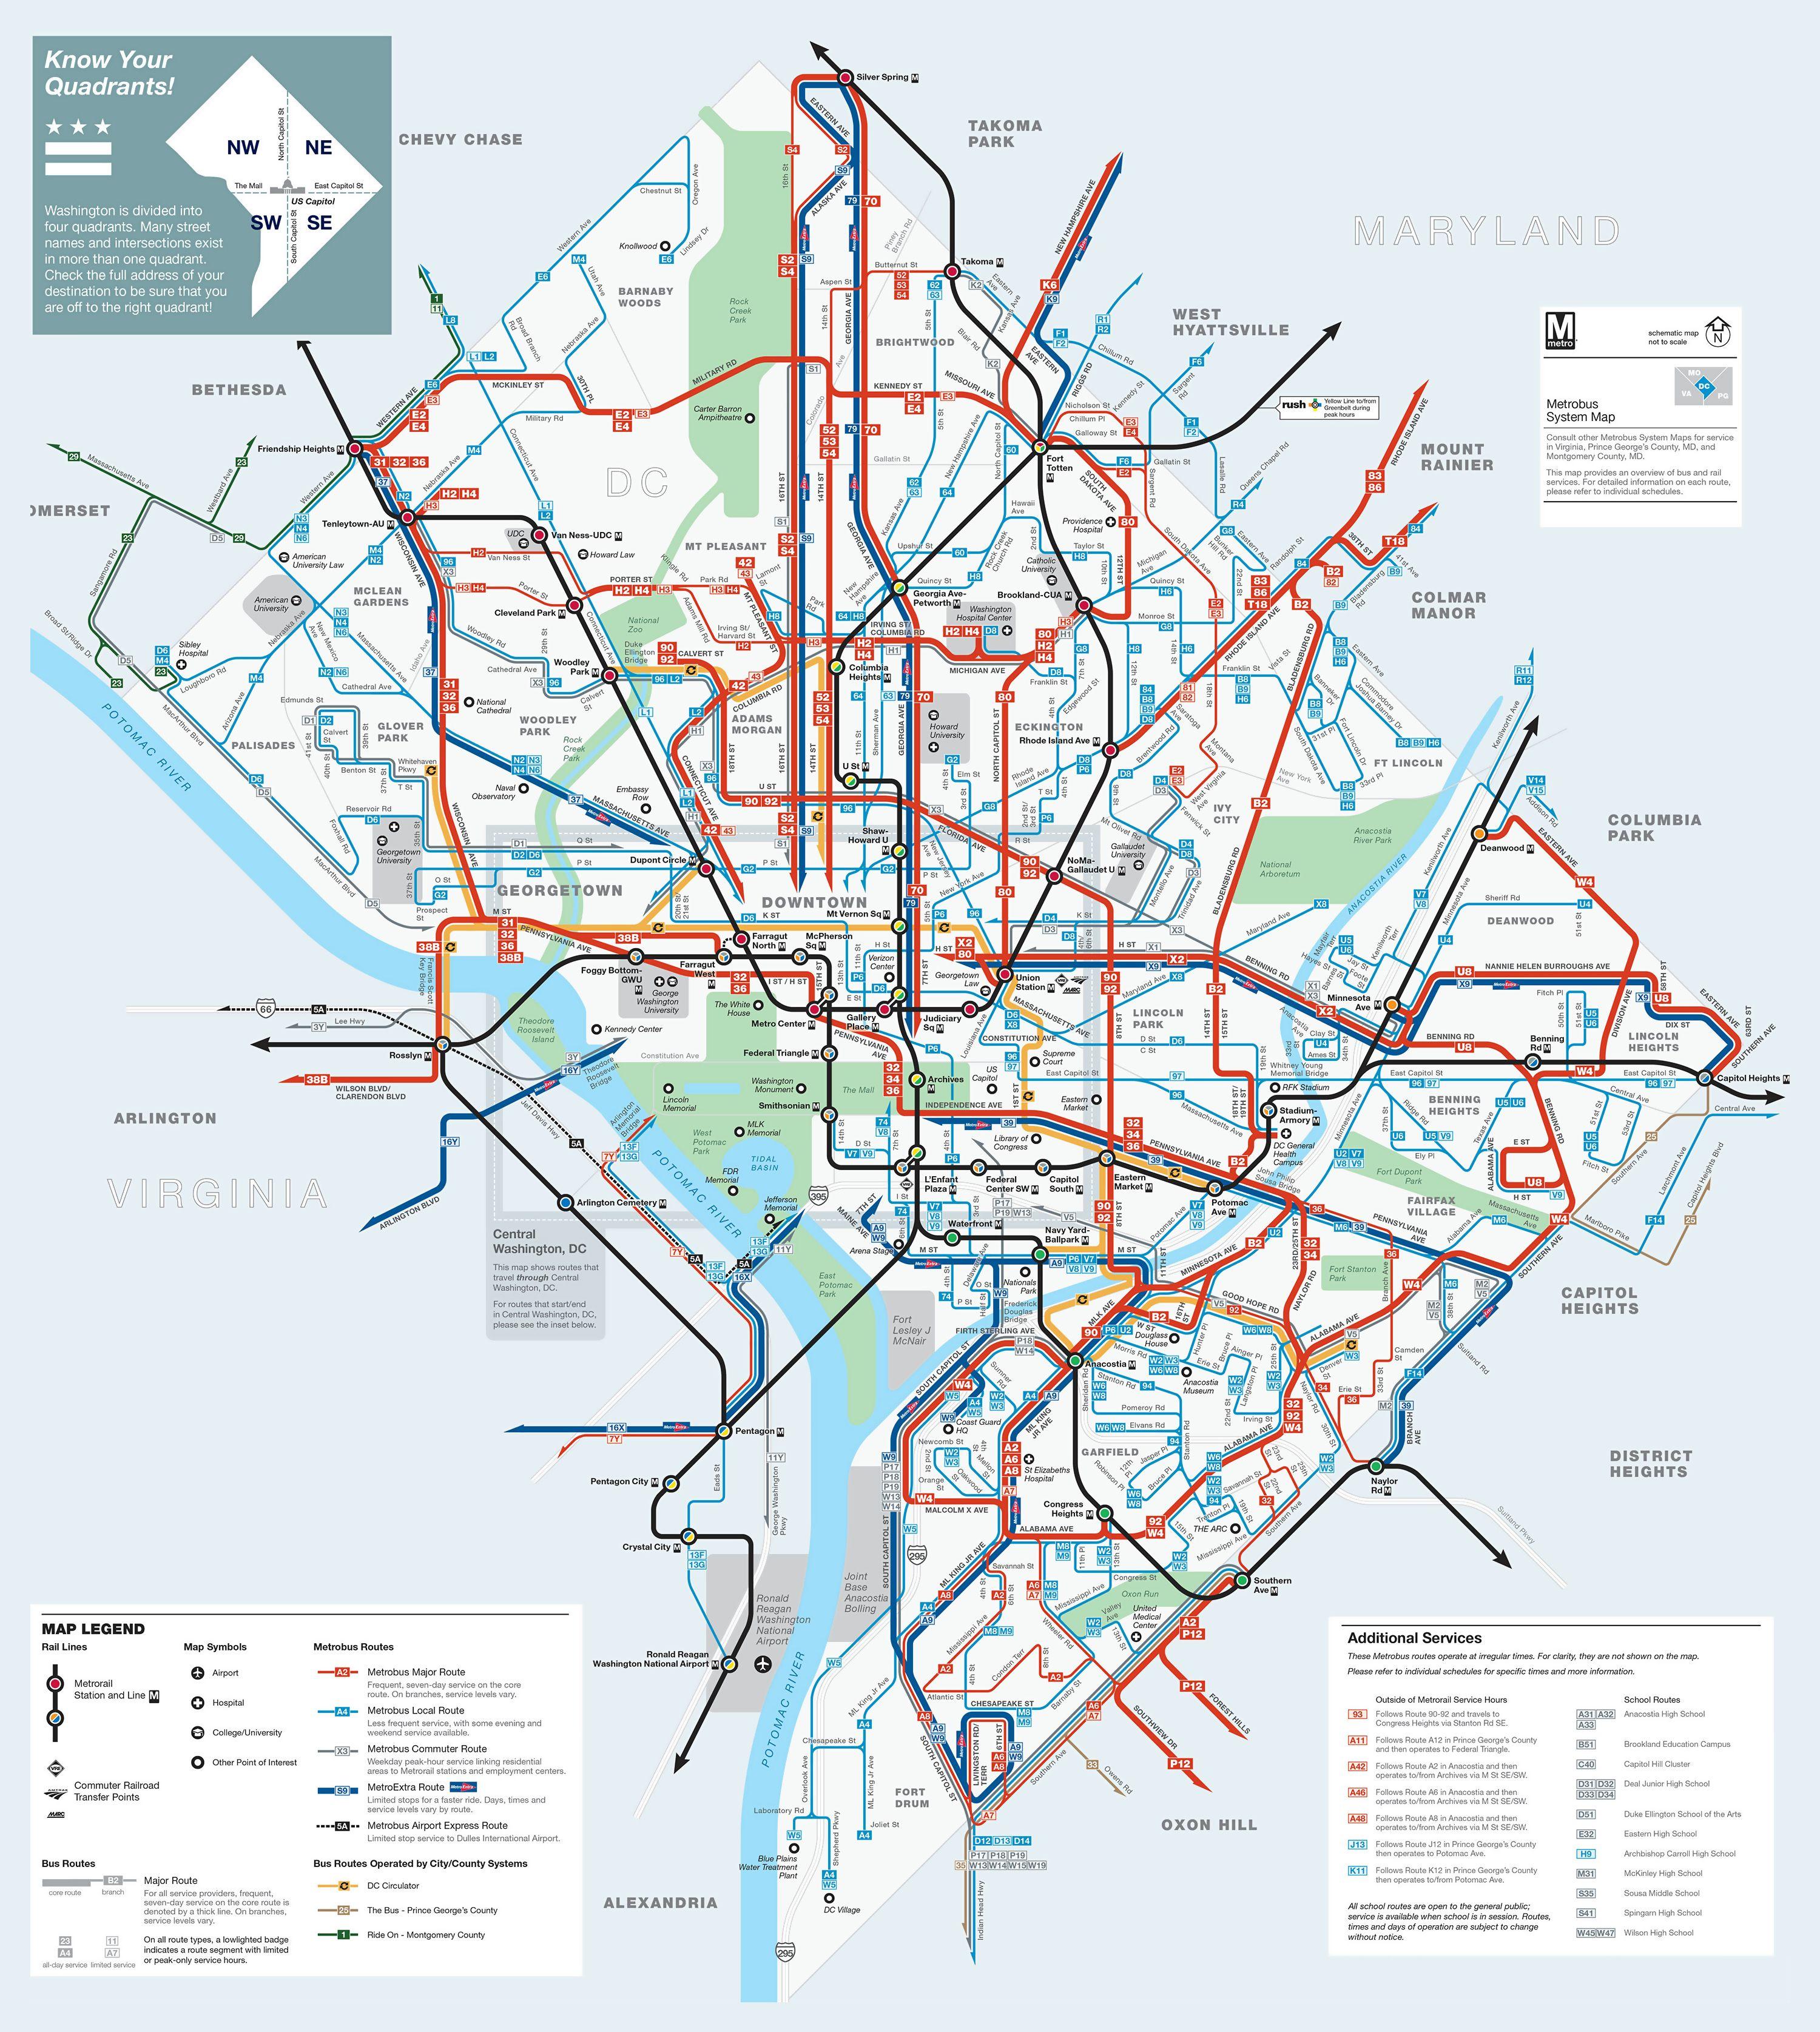 Dc bus routes map - Washington dc bus routes map (District of Columbia